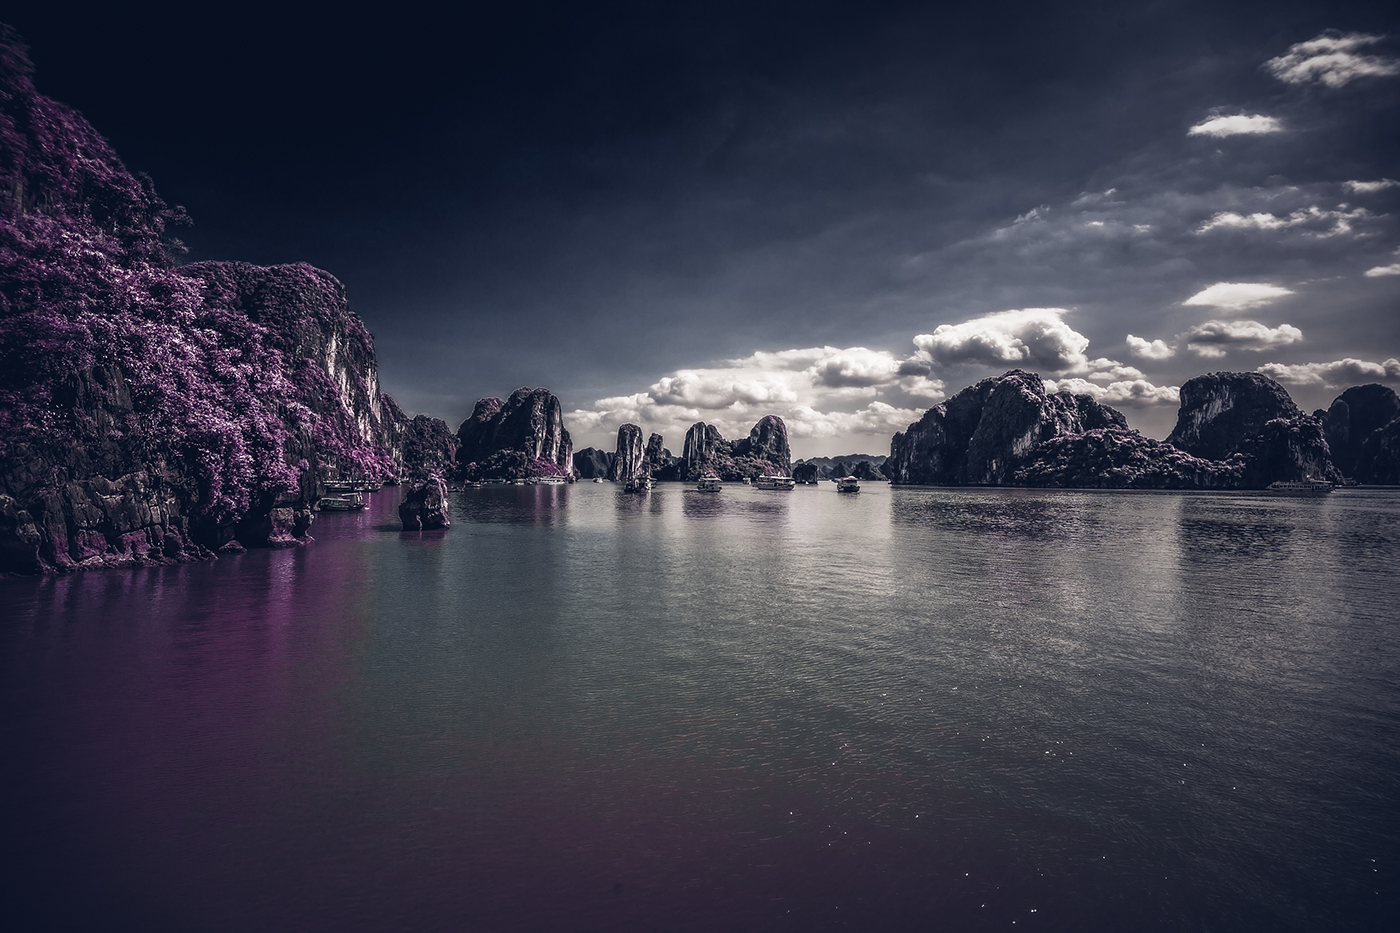 halong bay halongbay infrared Landscape natural vietnam heritage world